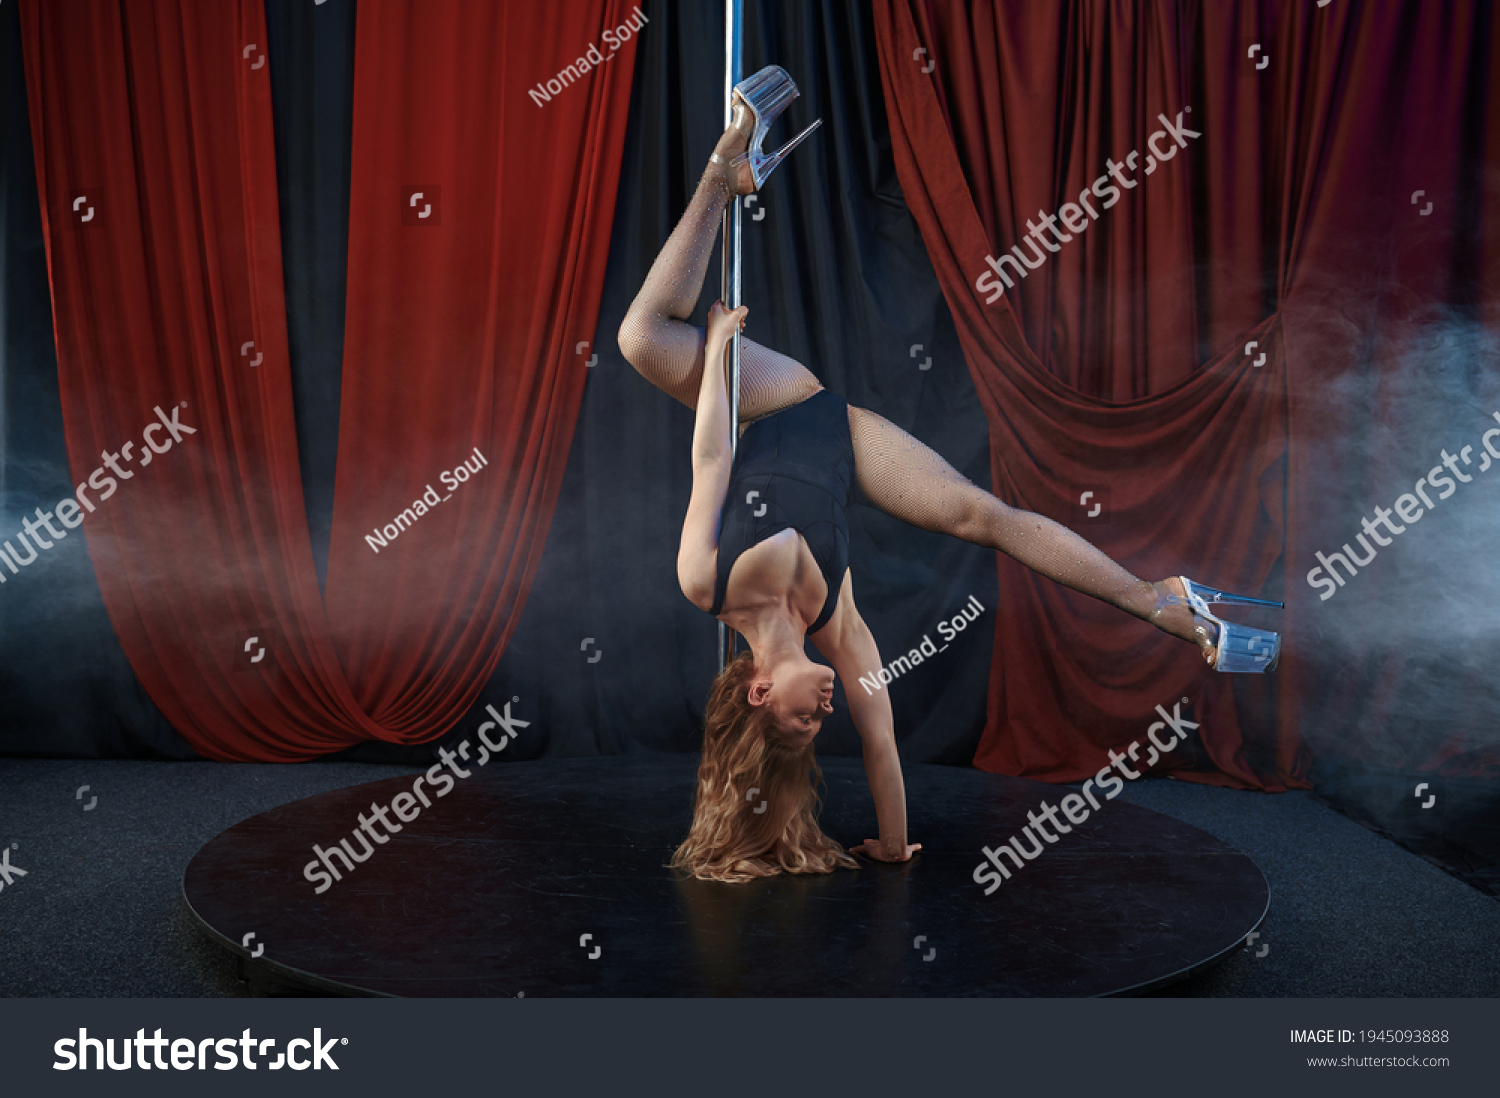 Sexy Showgirl On Stage Pole Dance Stok Fotoğrafı 1945093888 Shutterstock 